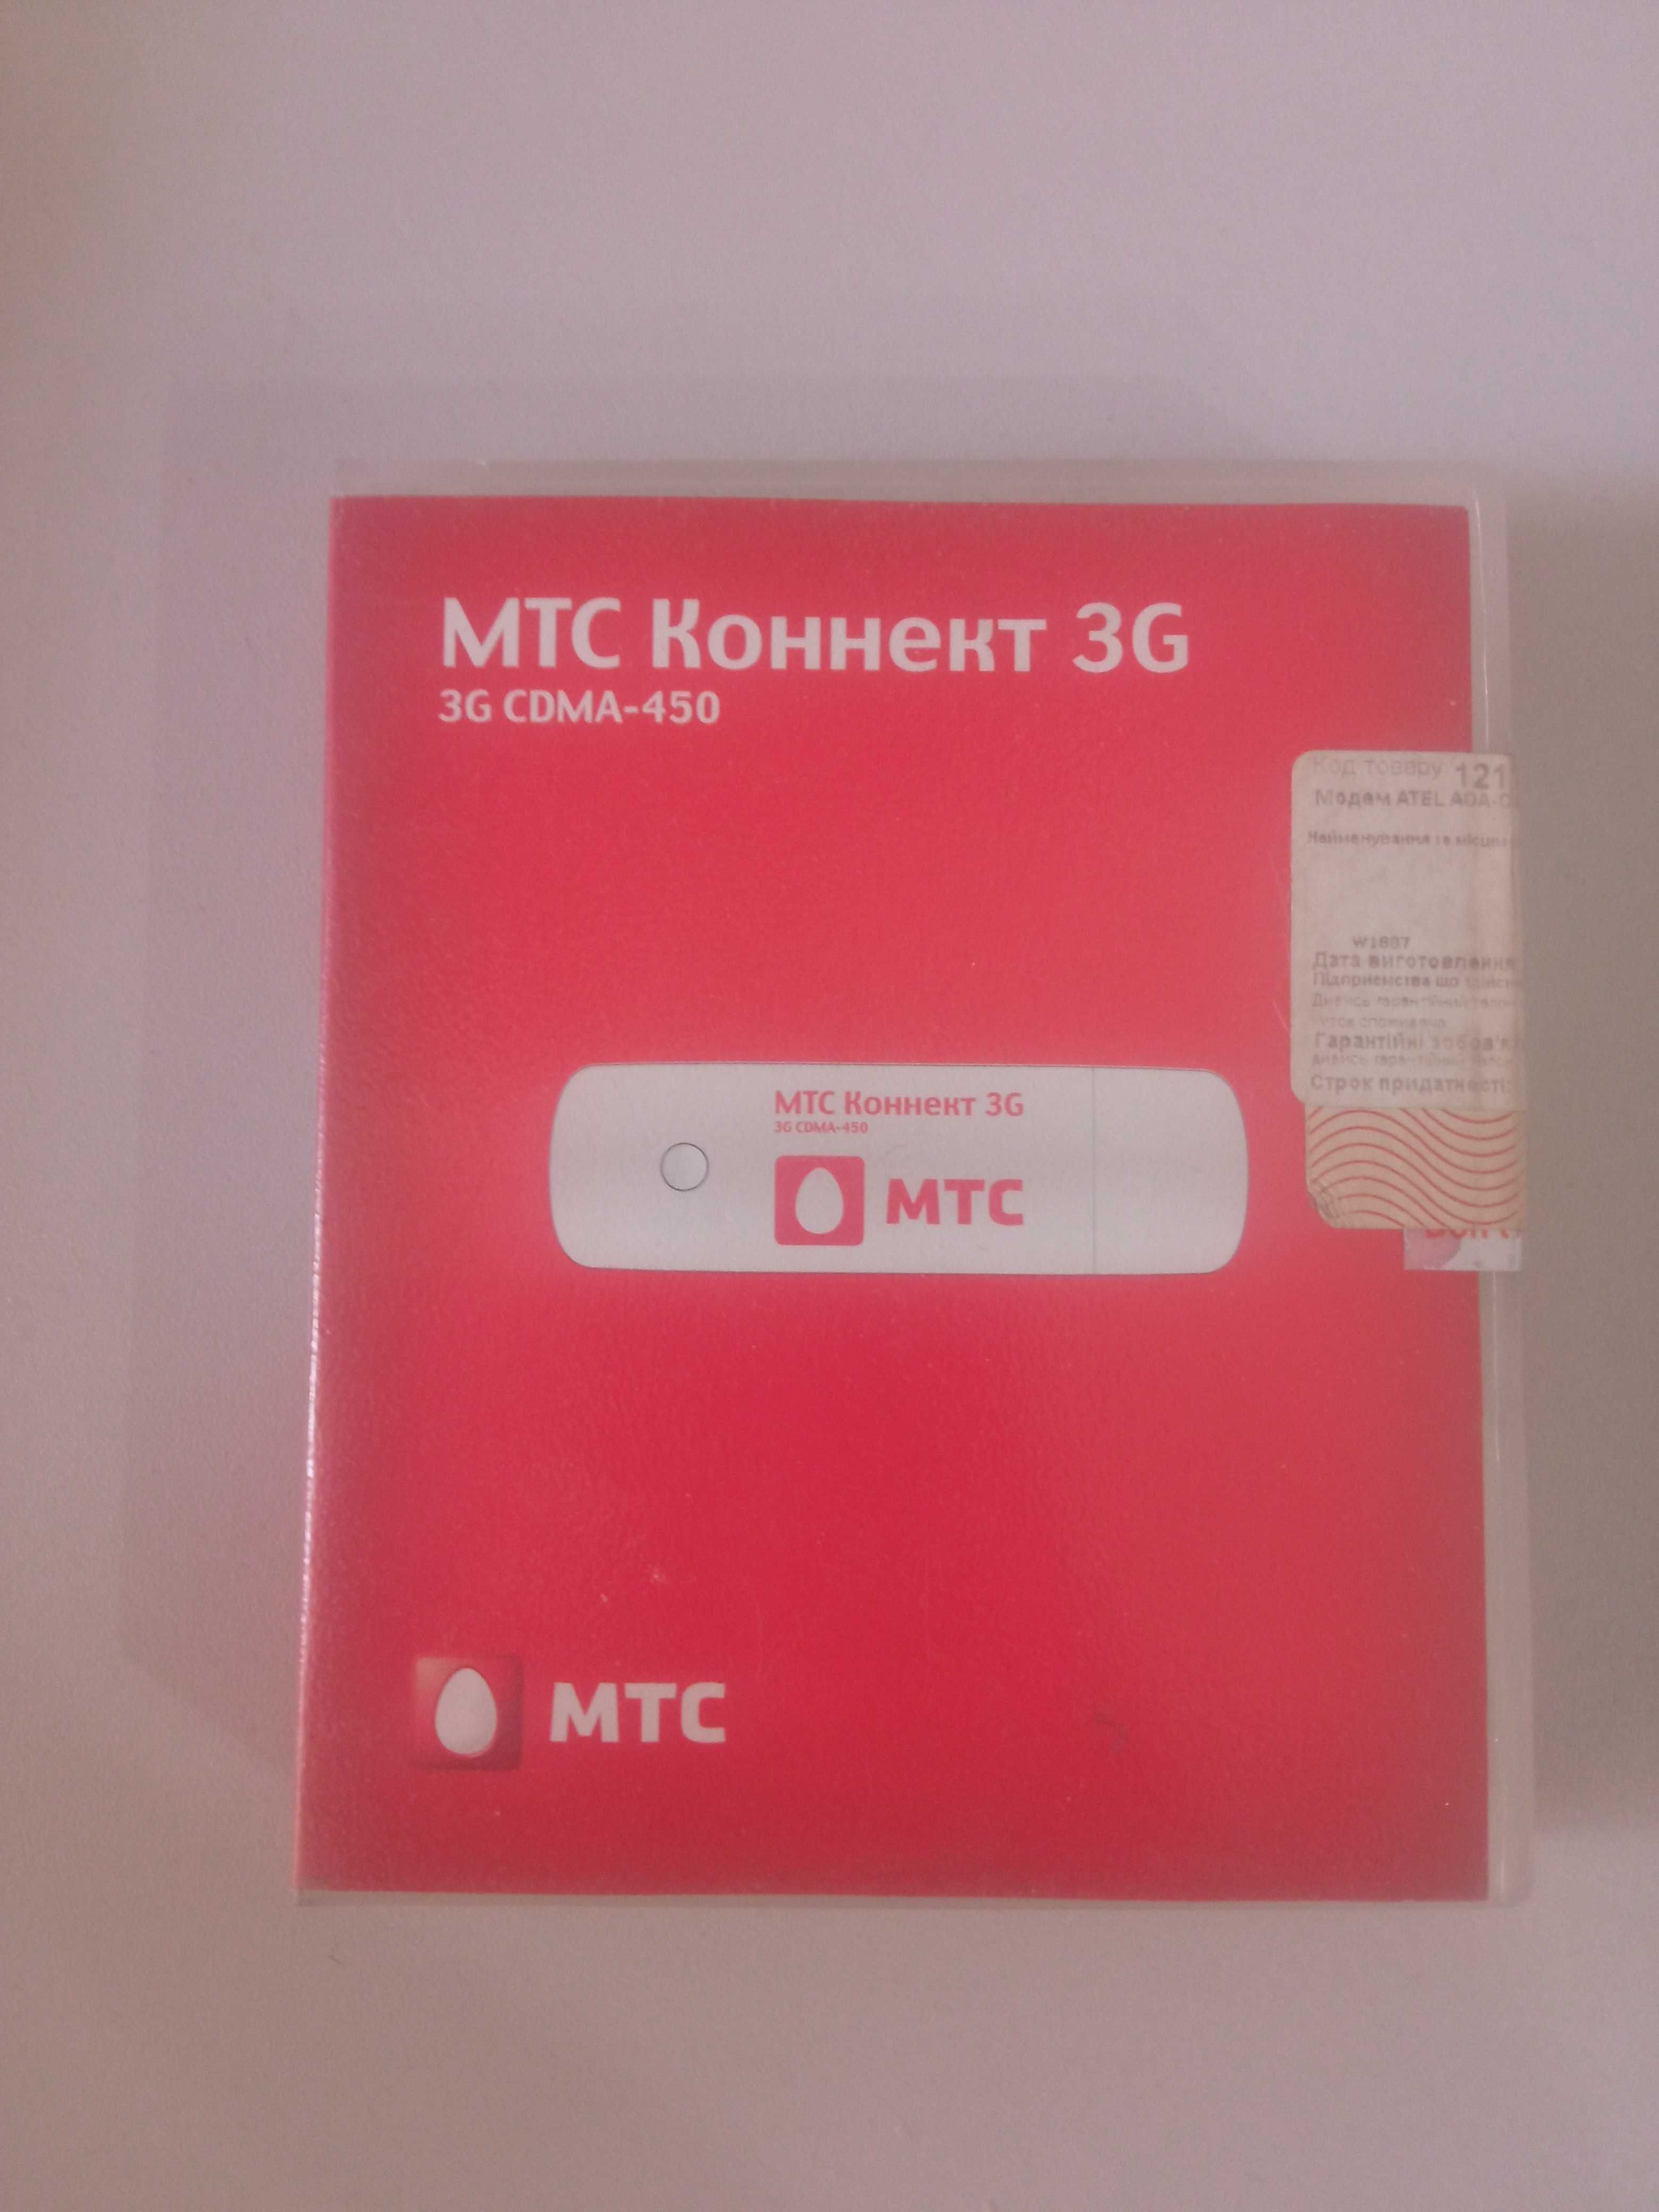 МТС коннект 3G CDMA 450